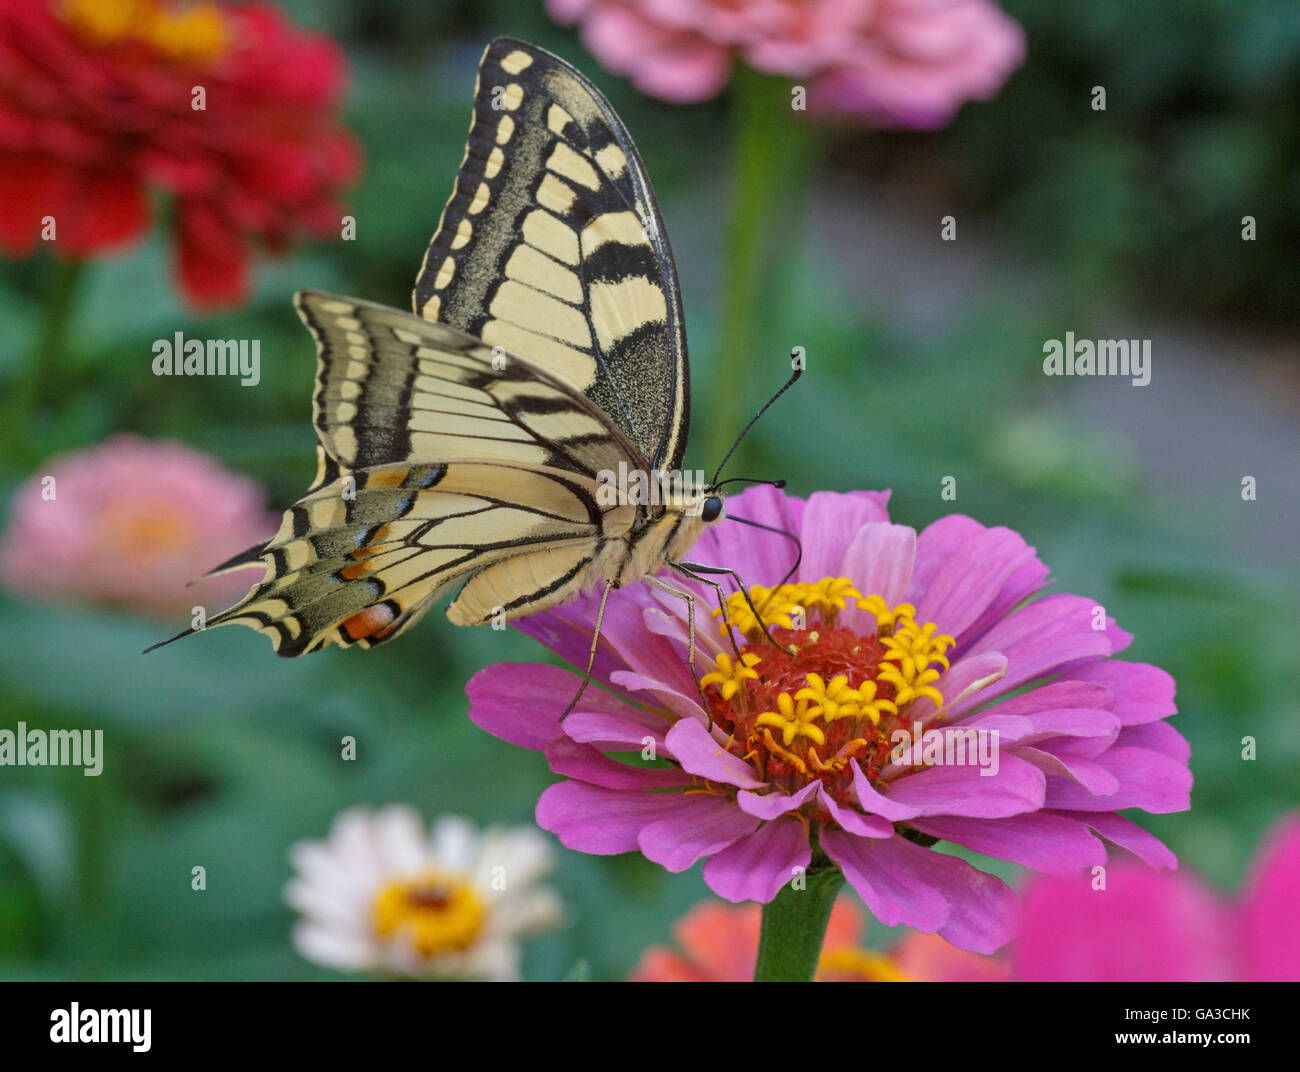 Papilio Machaon butterfly on zinnia flower Stock Photo